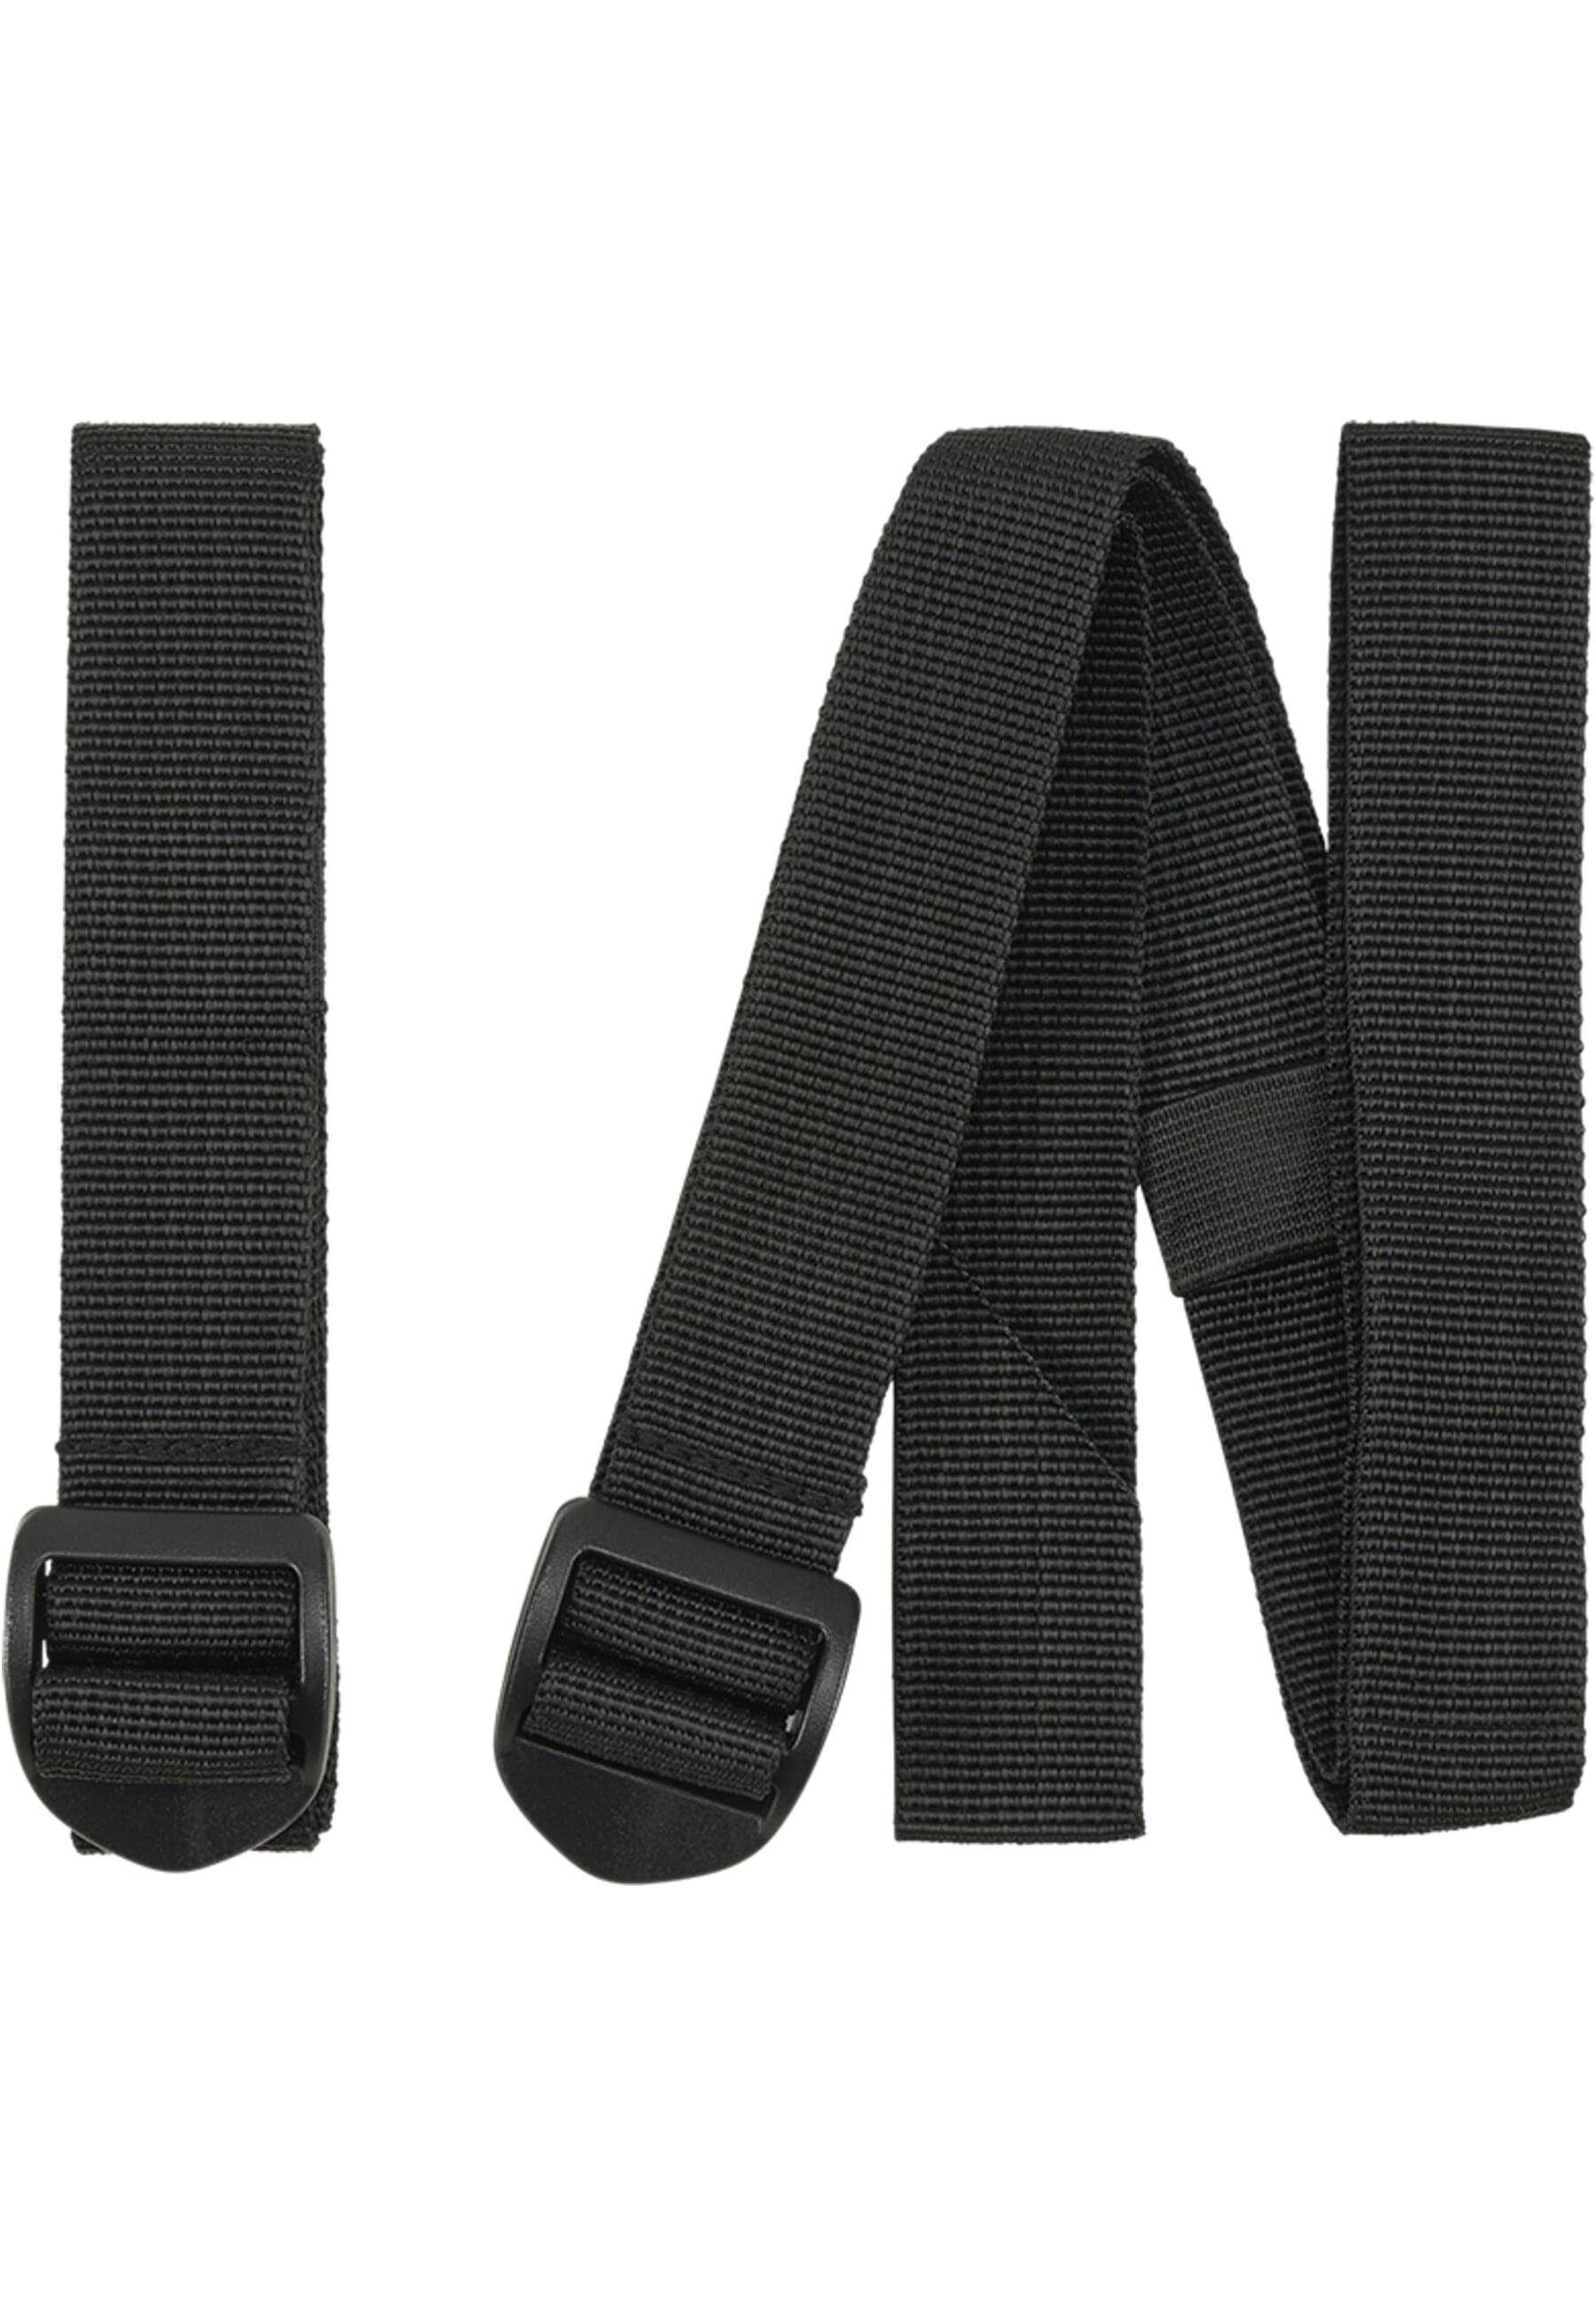 Brandit Schmuckset Packing black (1-tlg) Straps Unisex 120 2-Pack